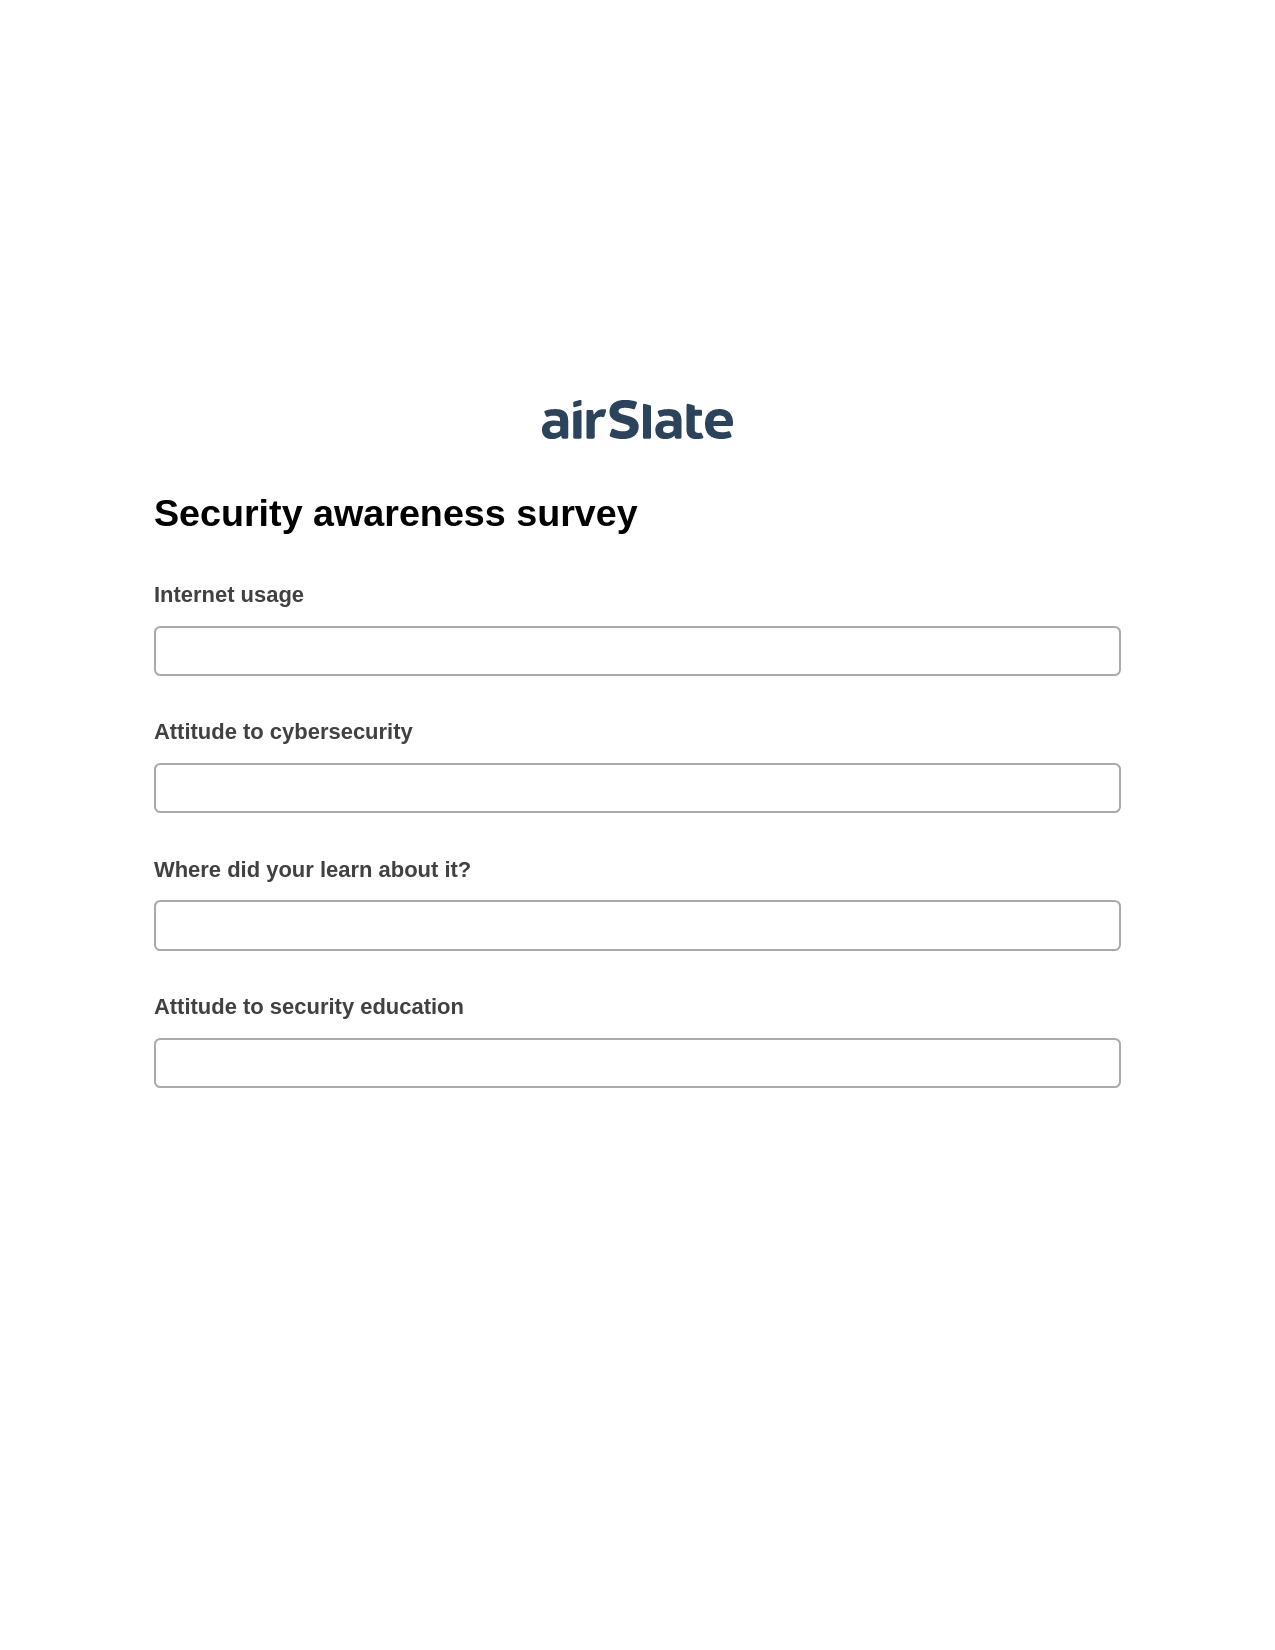 Security awareness survey Pre-fill from Smartsheet Bot, SendGrid send Campaign bot, Slack Two-Way Binding Bot